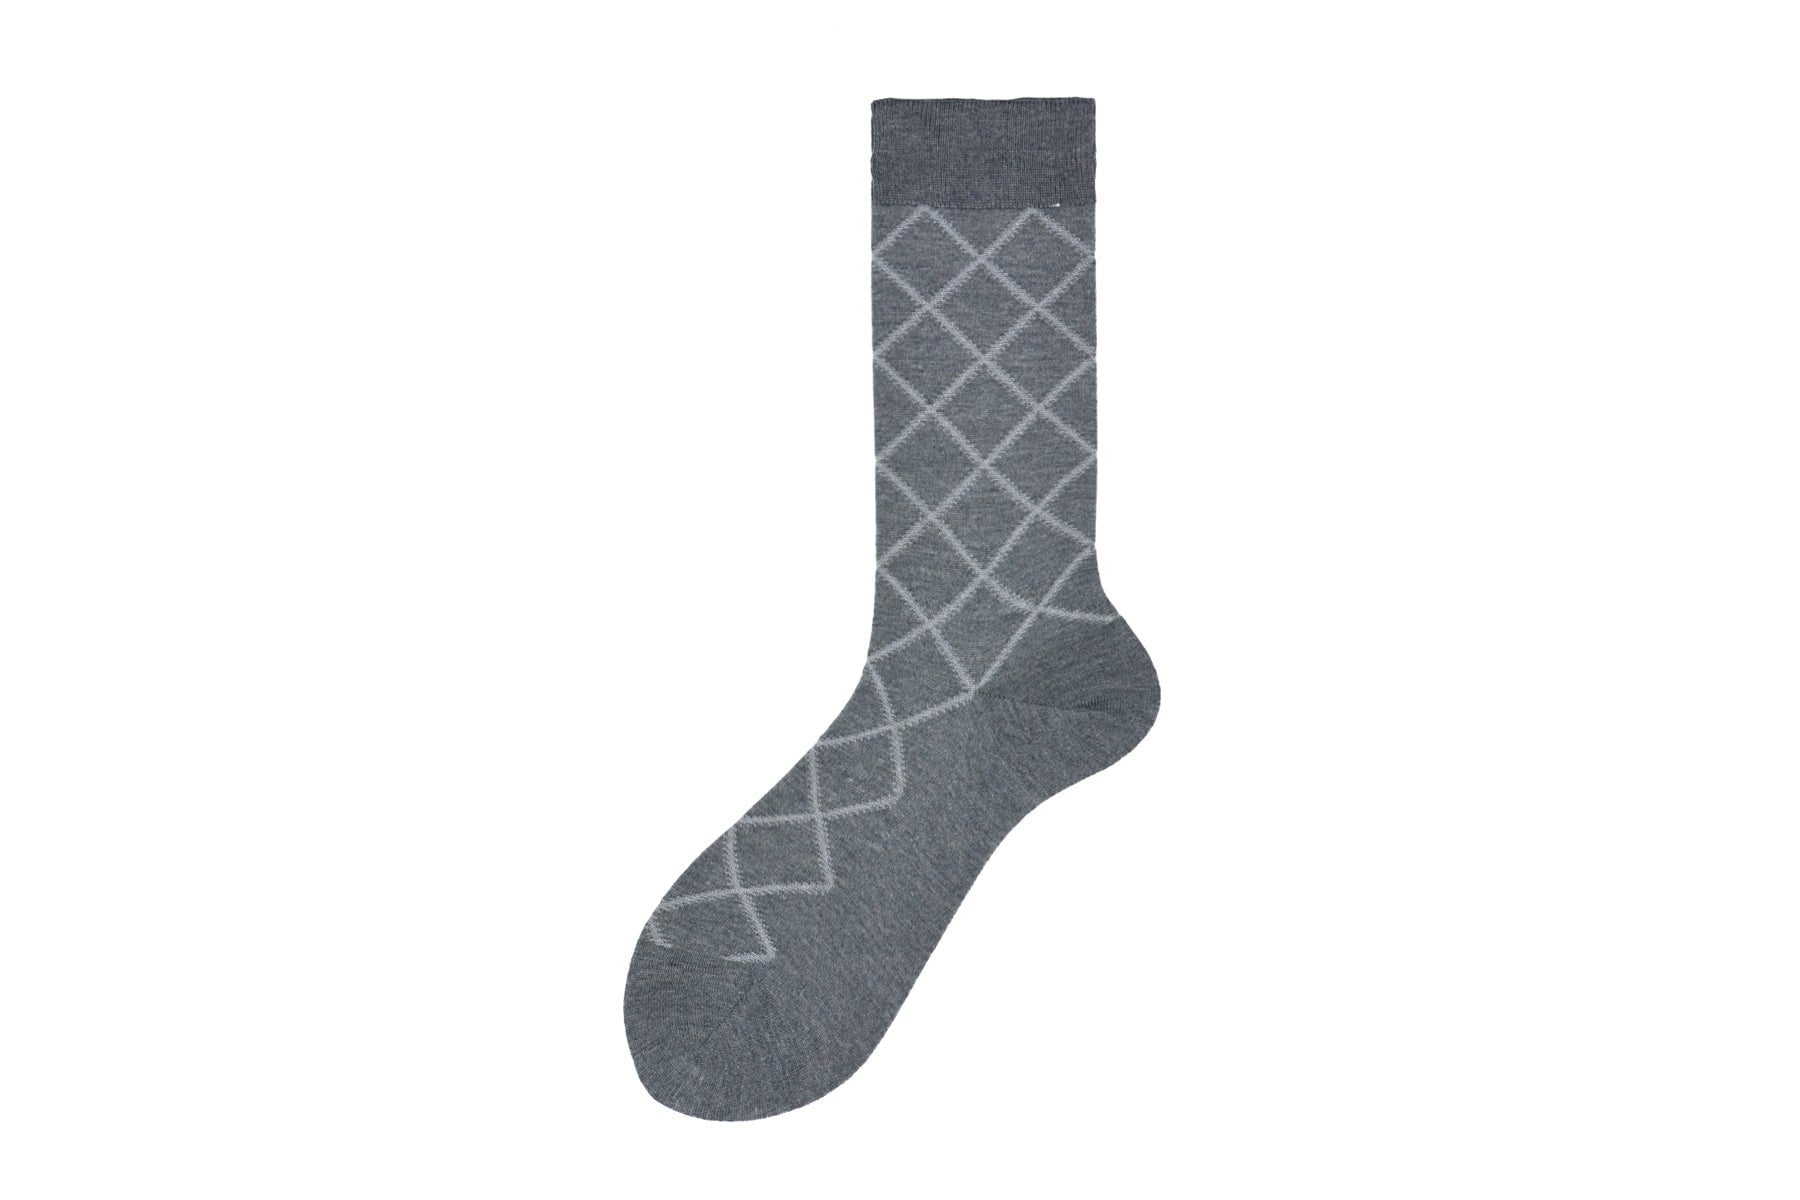 Herren Socken aus Merino Wolle in Grau- Chelsea Herren Socken Alto Milano 